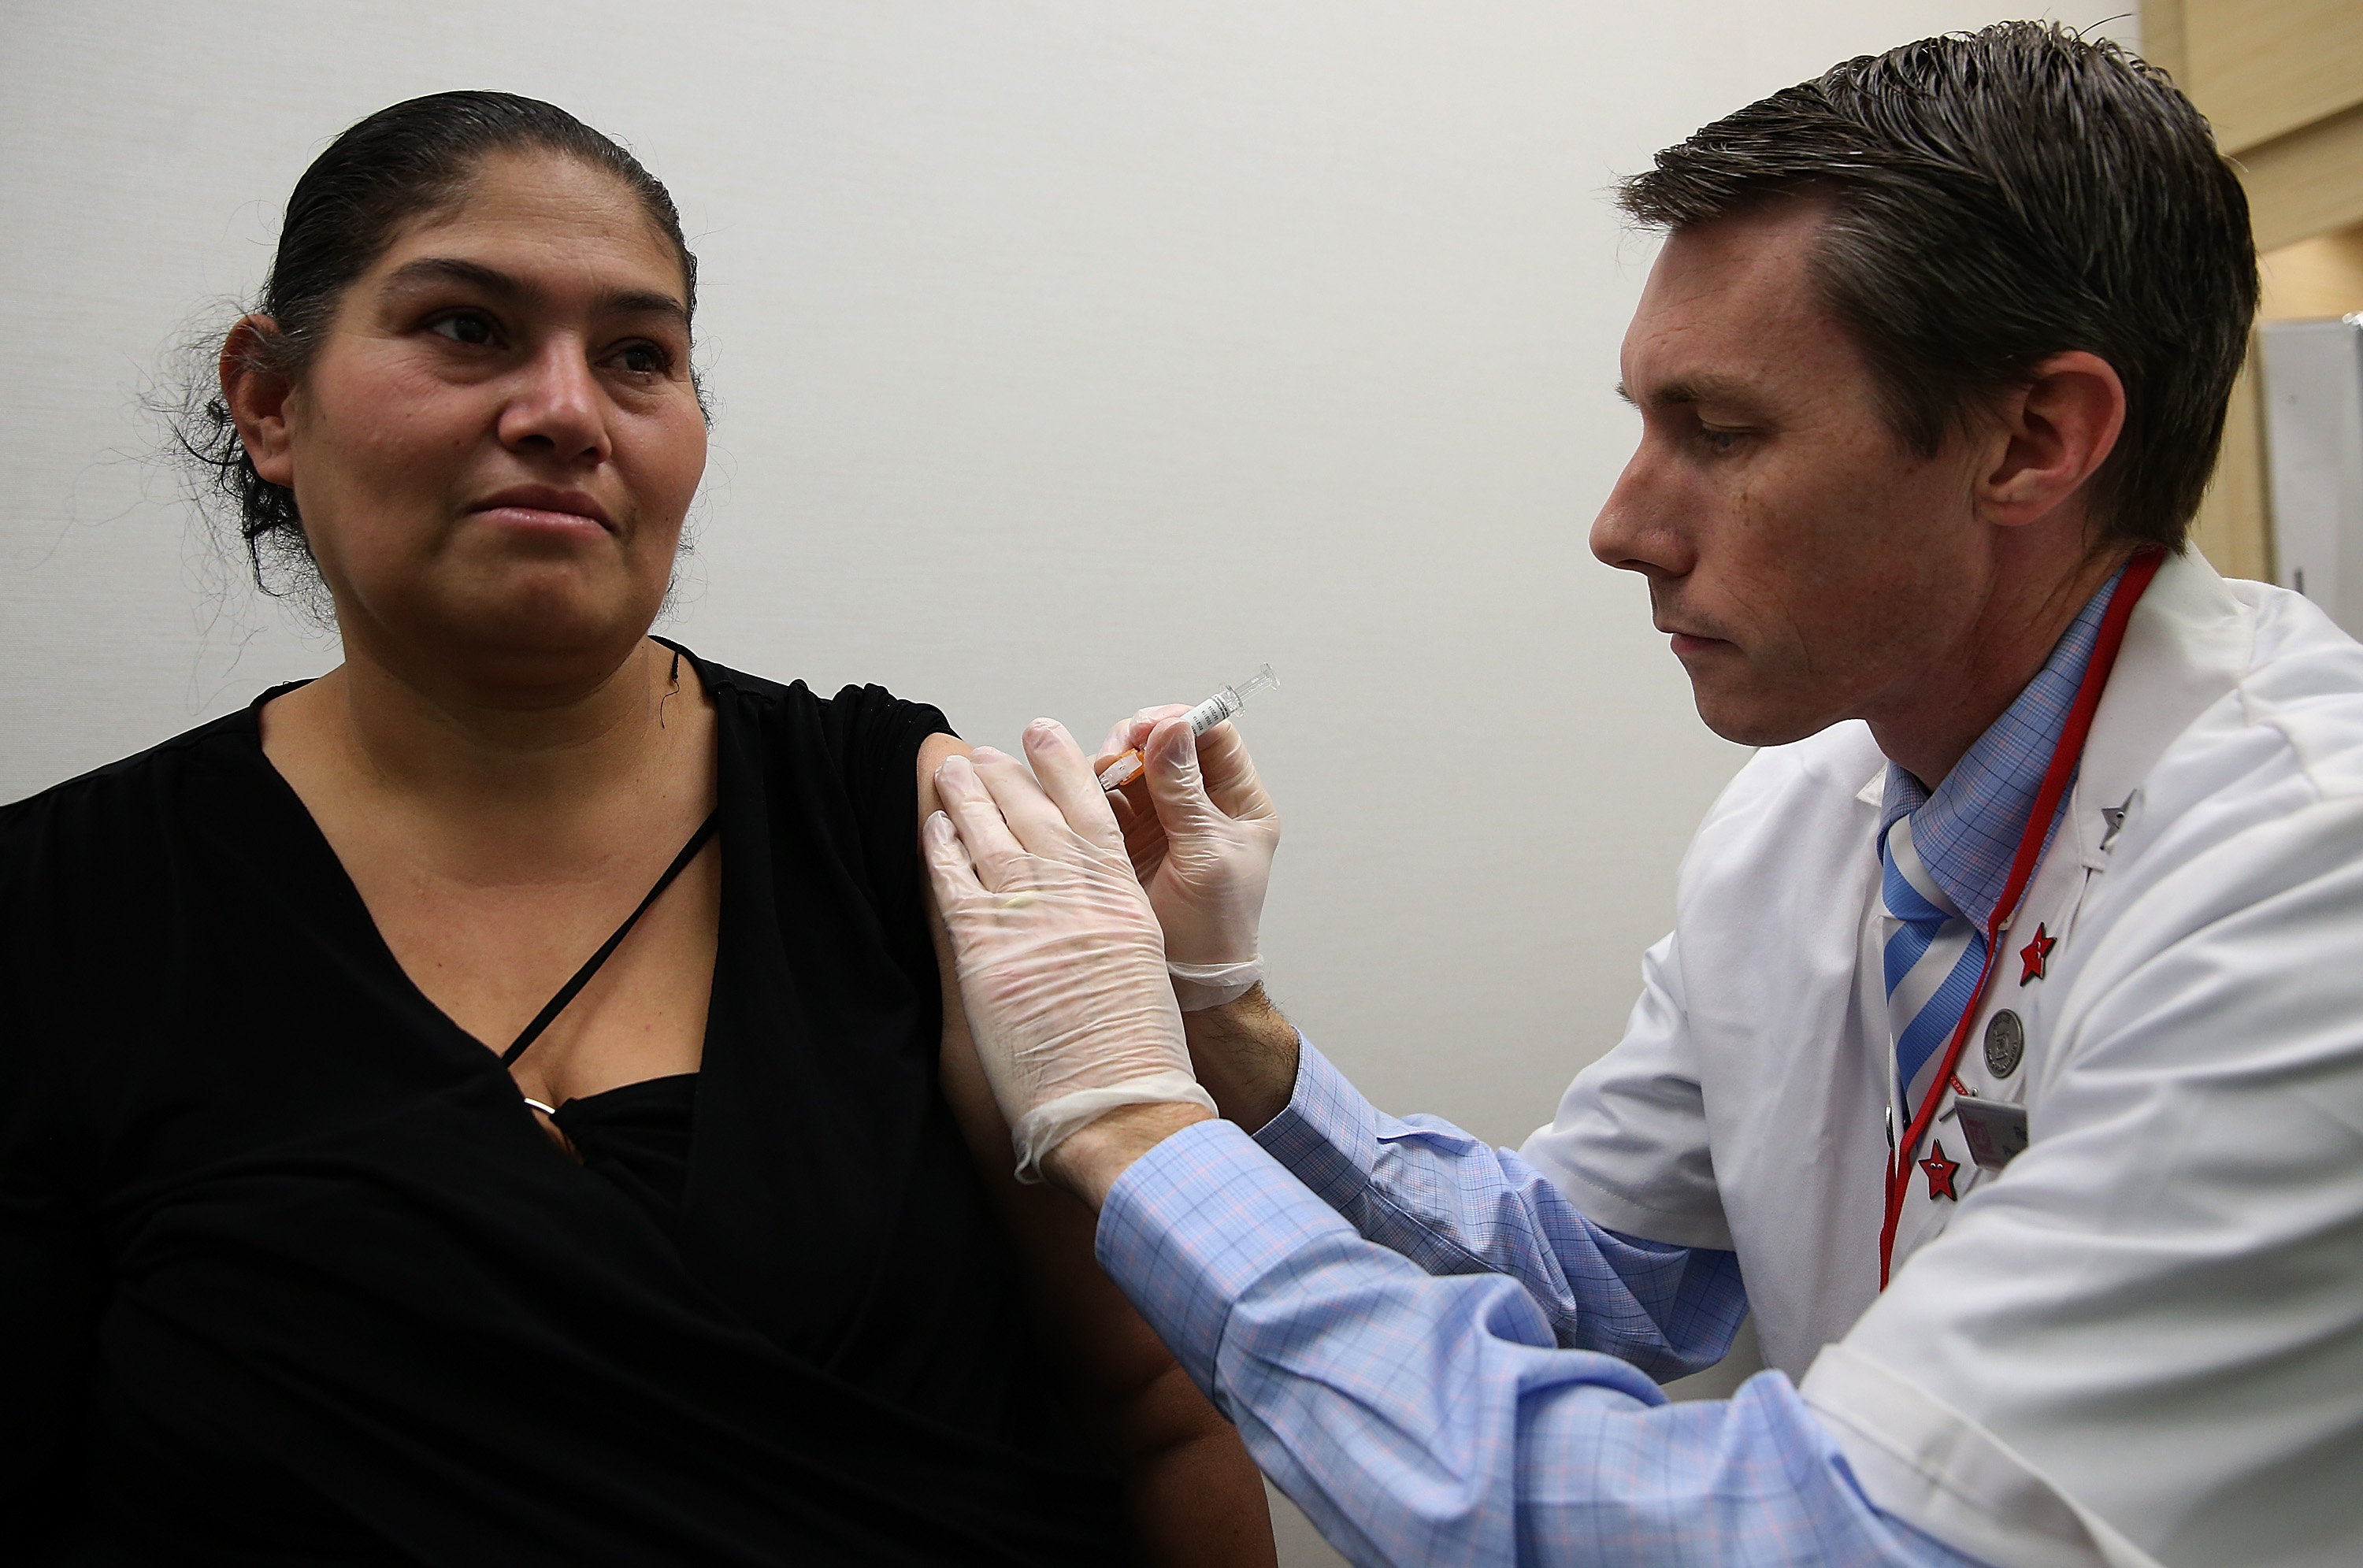 A doctor gives a woman a flu shot.